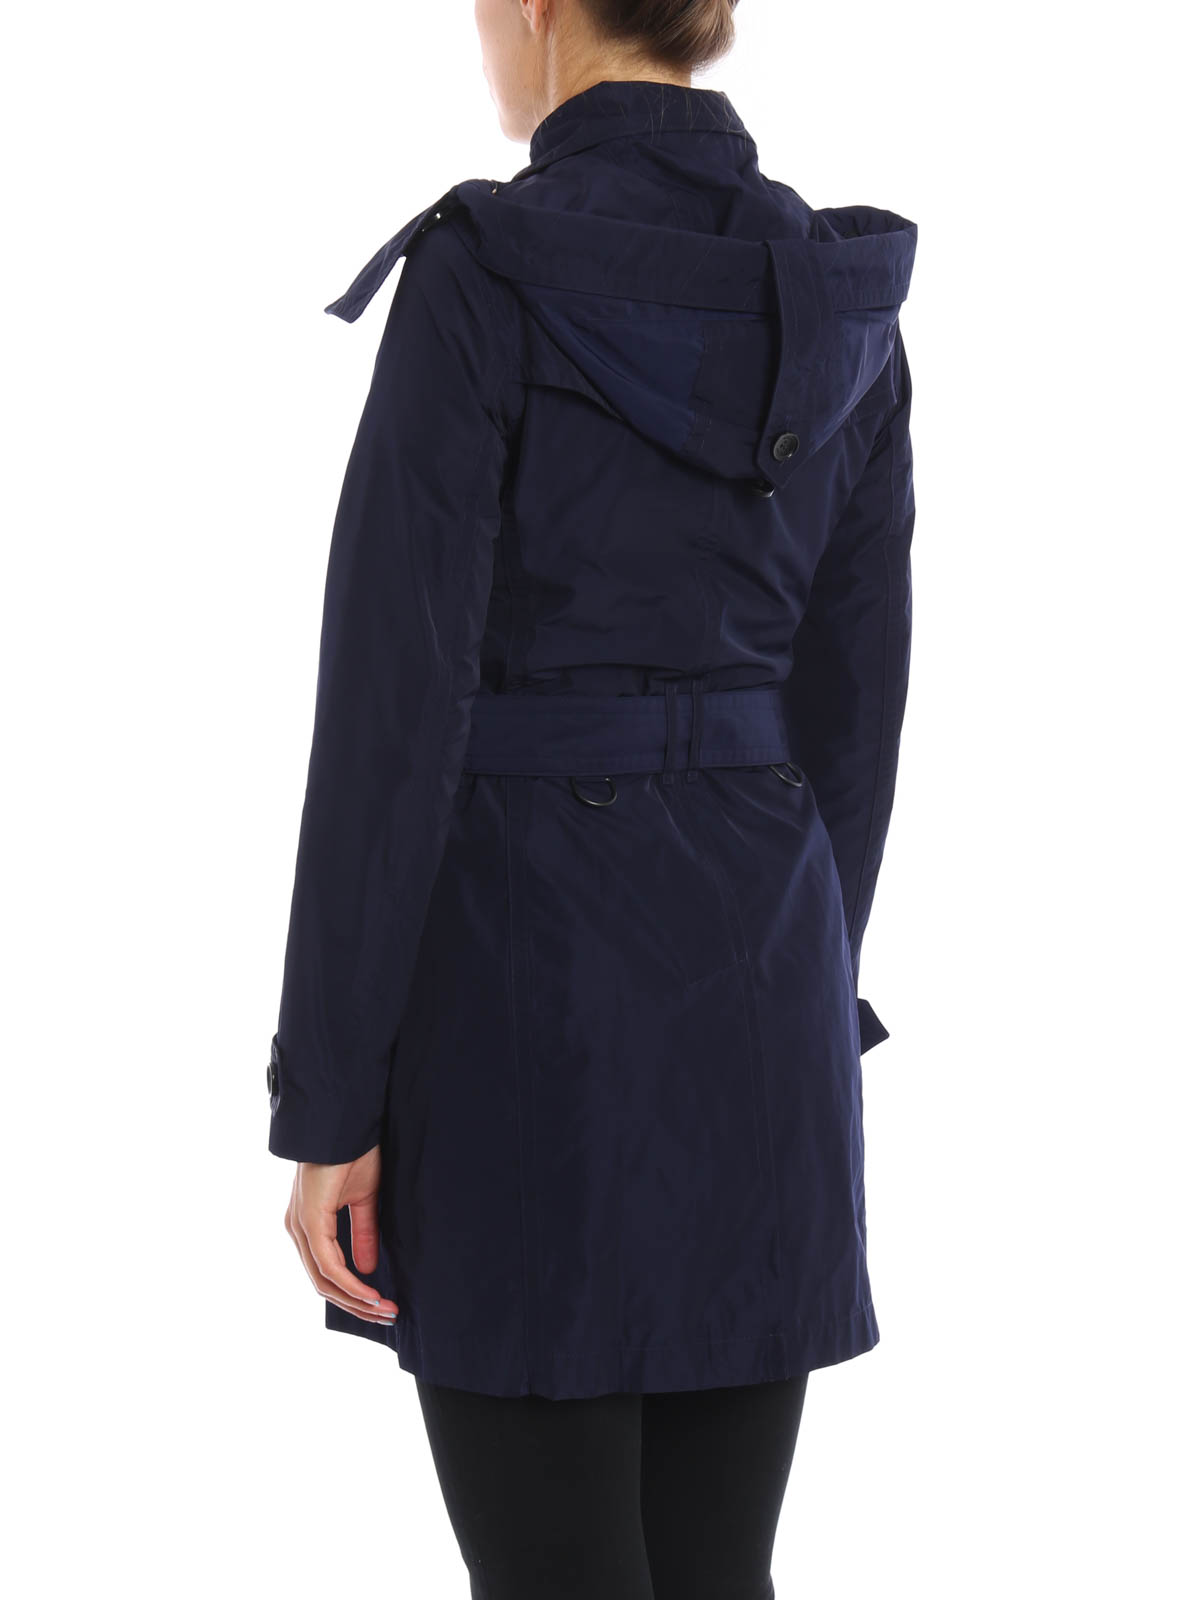 burberry balmoral coat